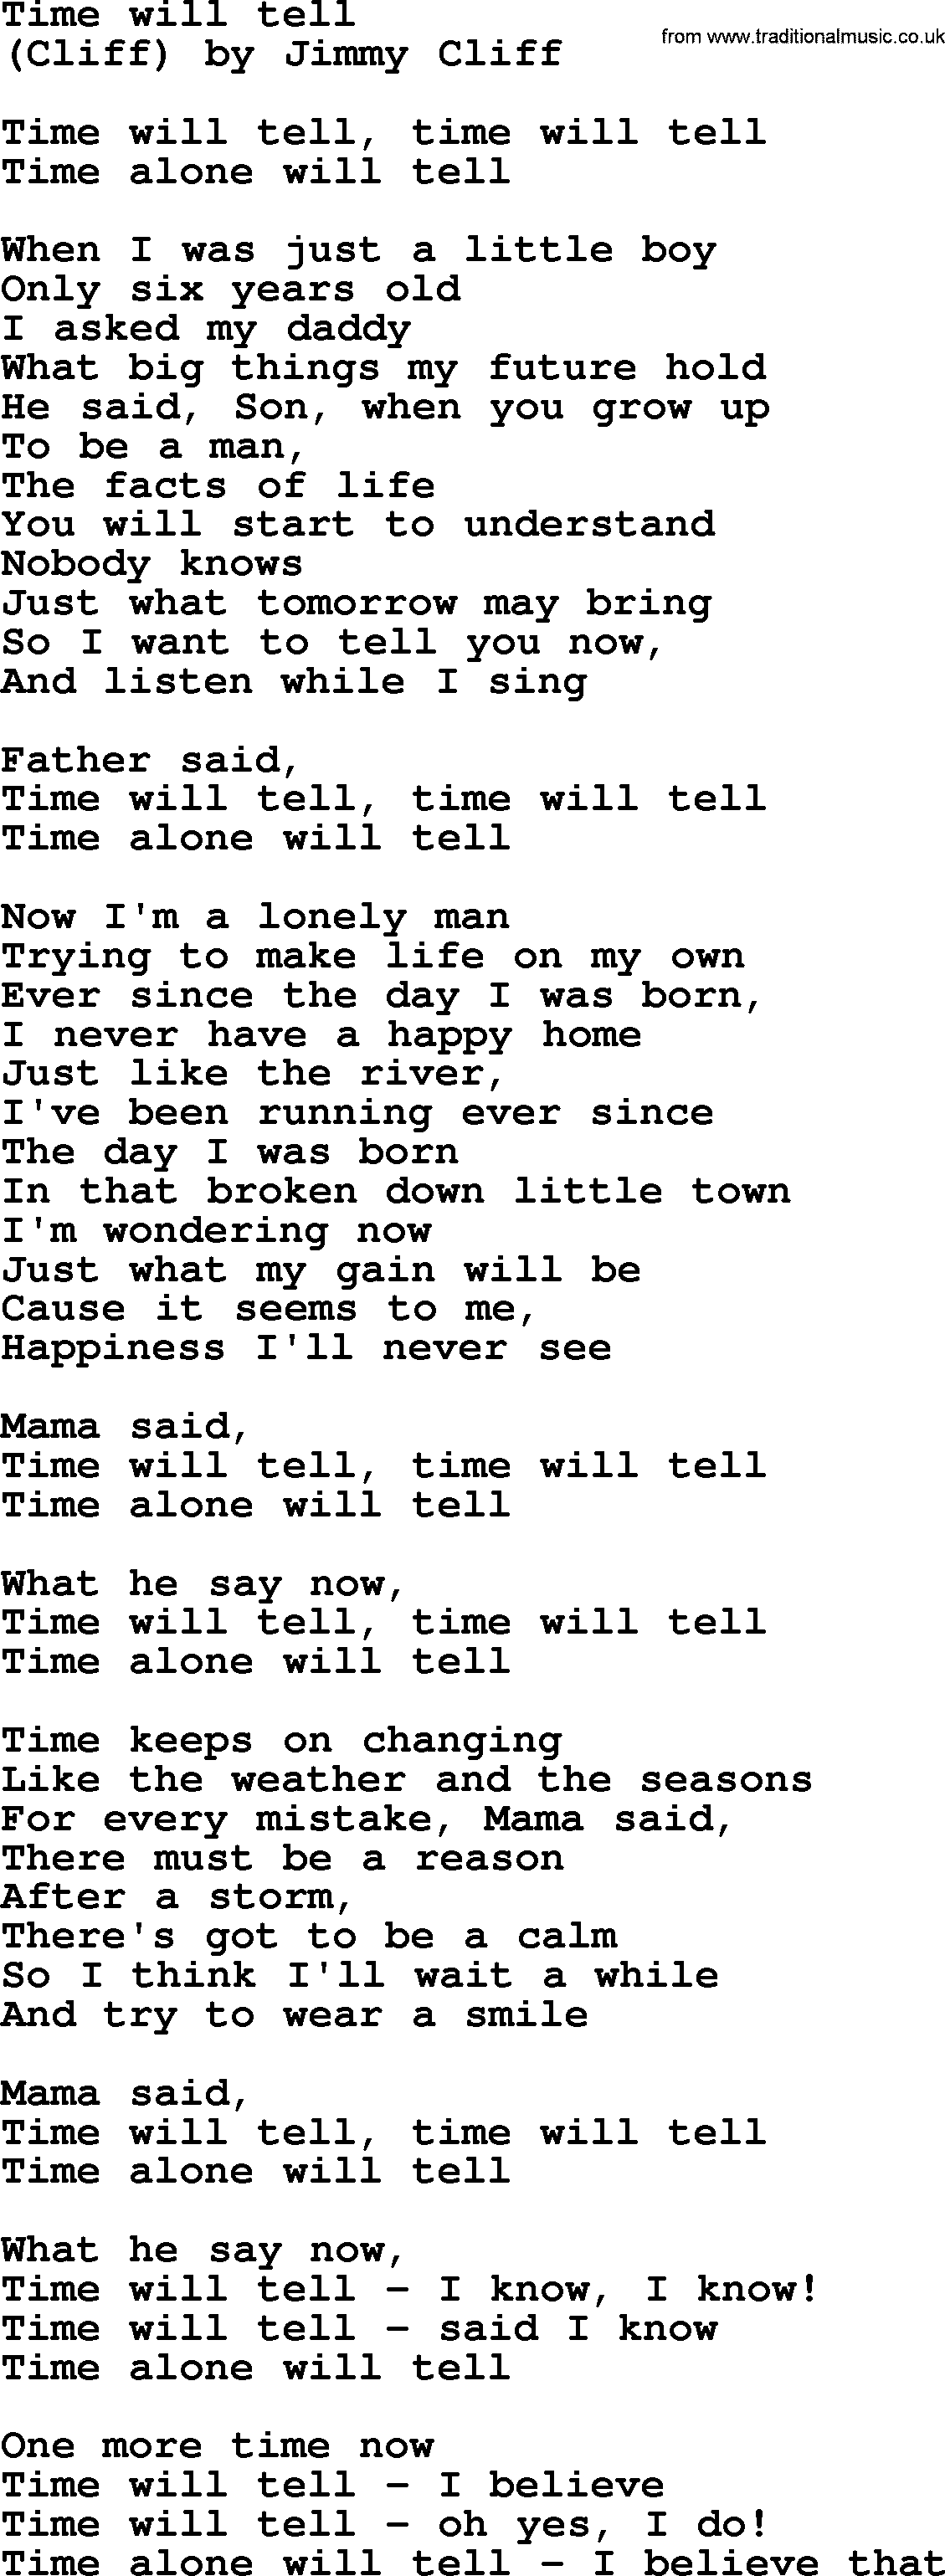 Bruce Springsteen song: Time Will Tell lyrics